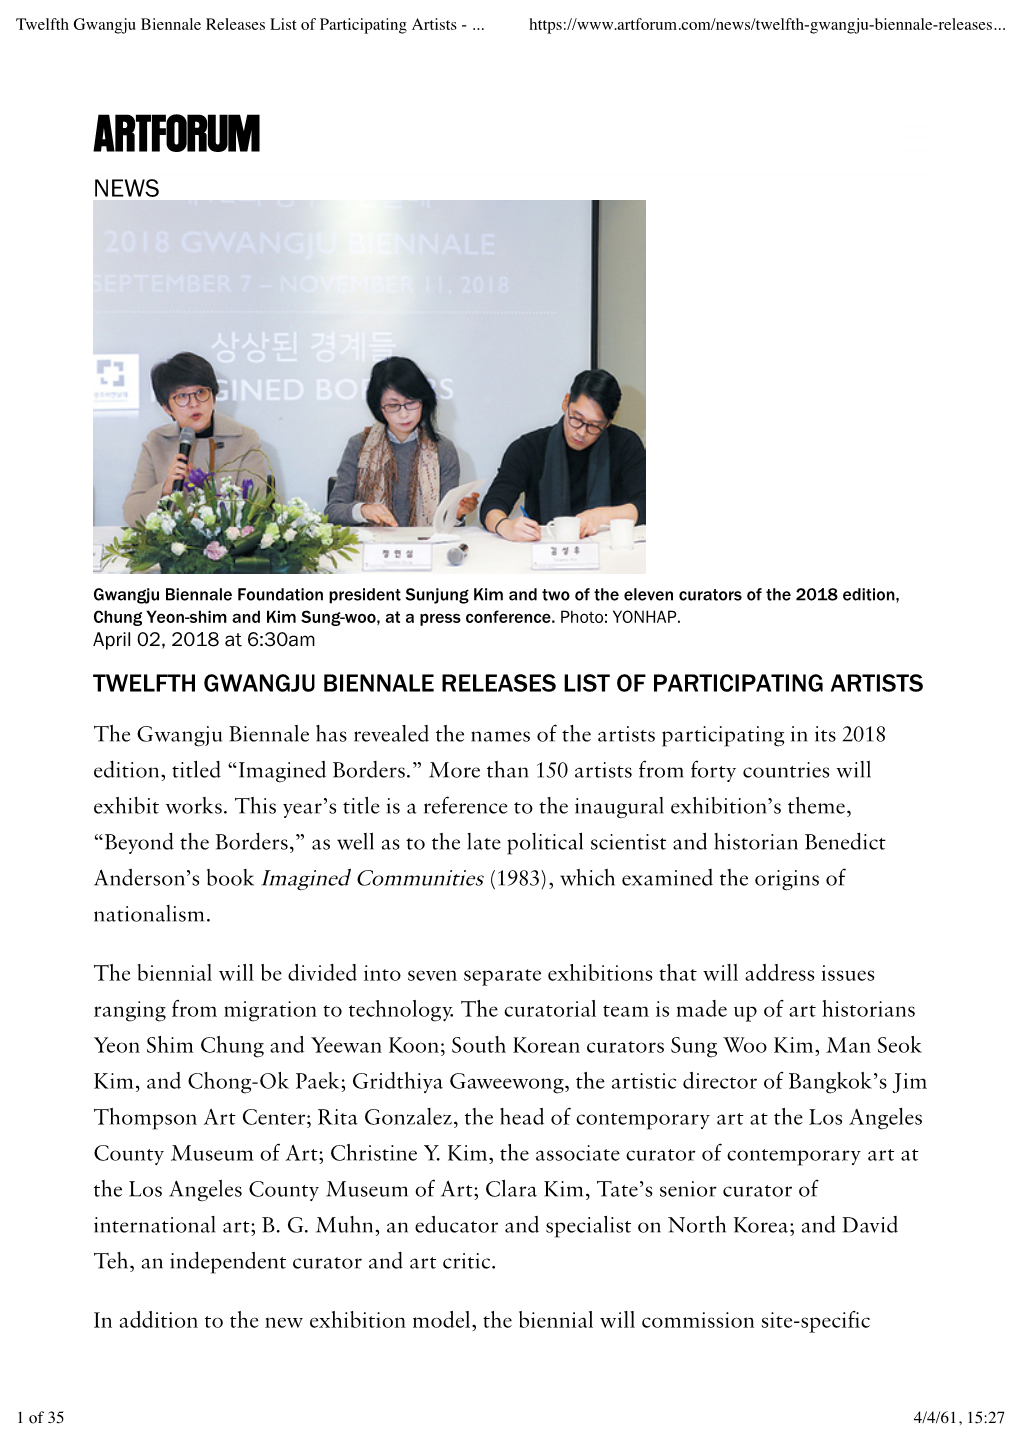 Twelfth Gwangju Biennale Releases List of Participating Artists -